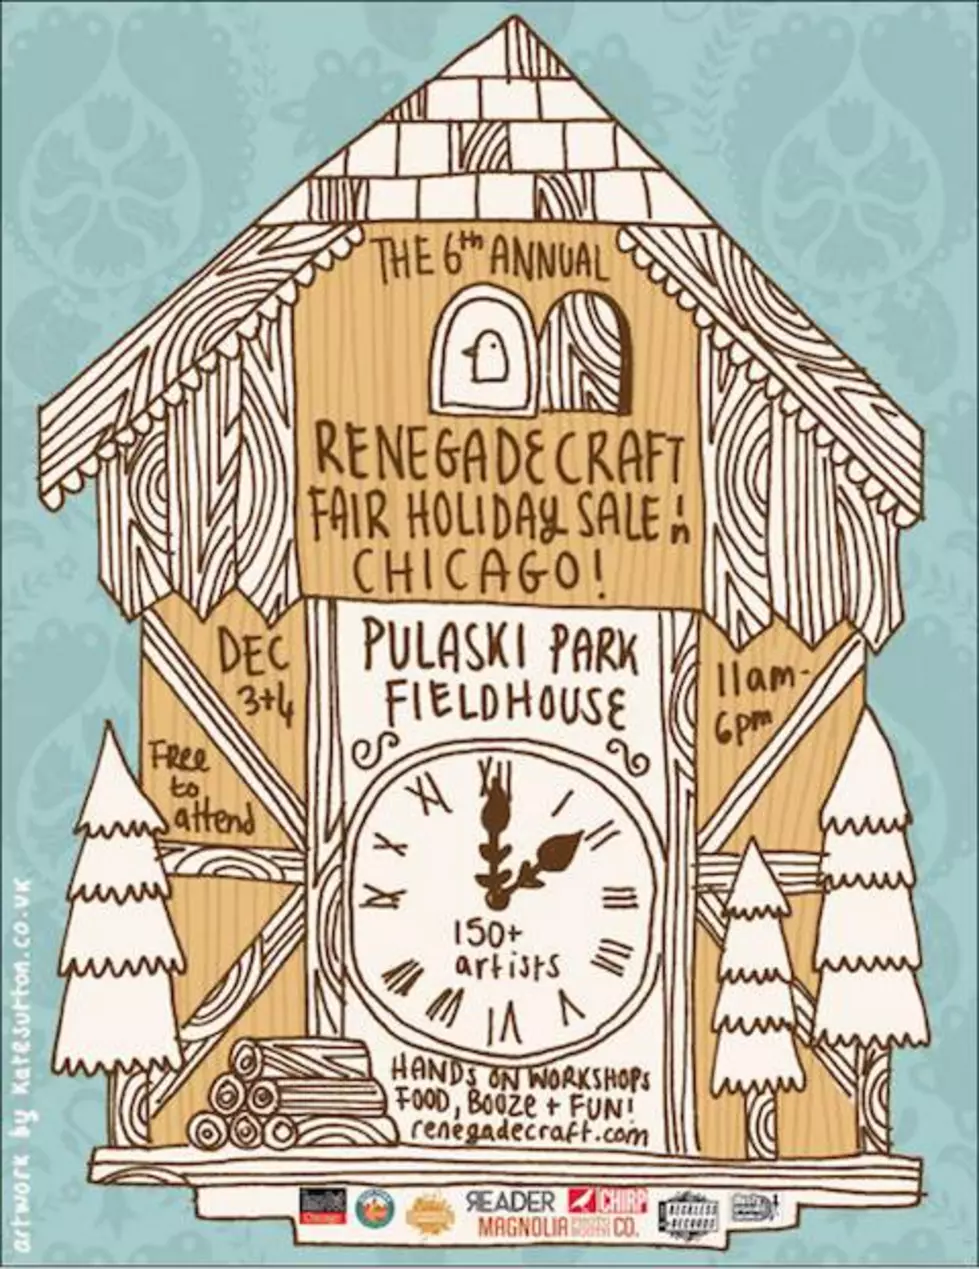 Renegade Craft Fair Holiday Market returns this weekend